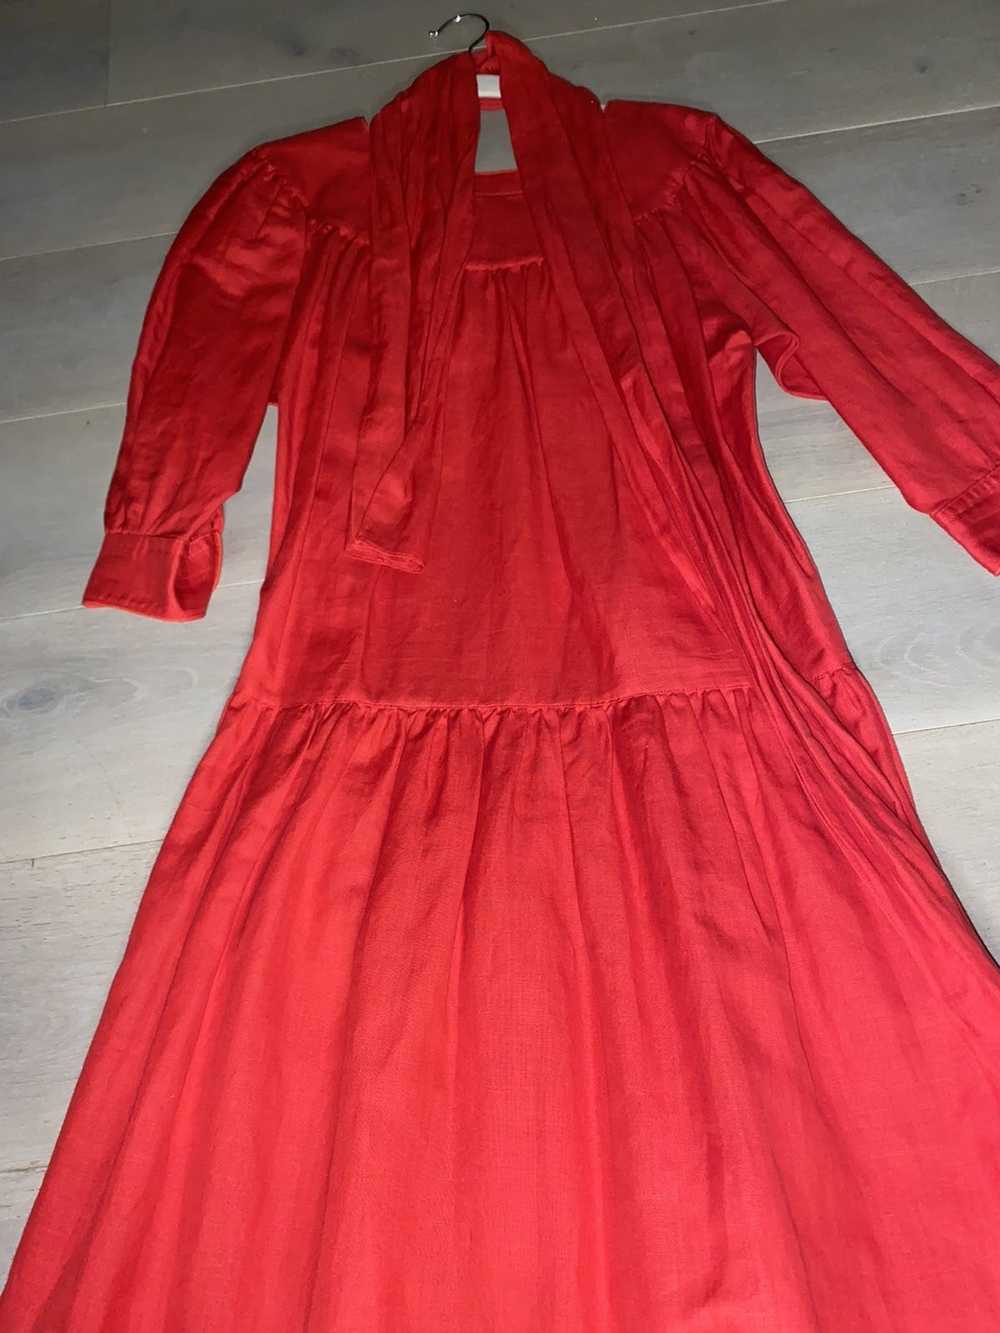 Kenzo Vintage Kenzo Red Dress - image 2